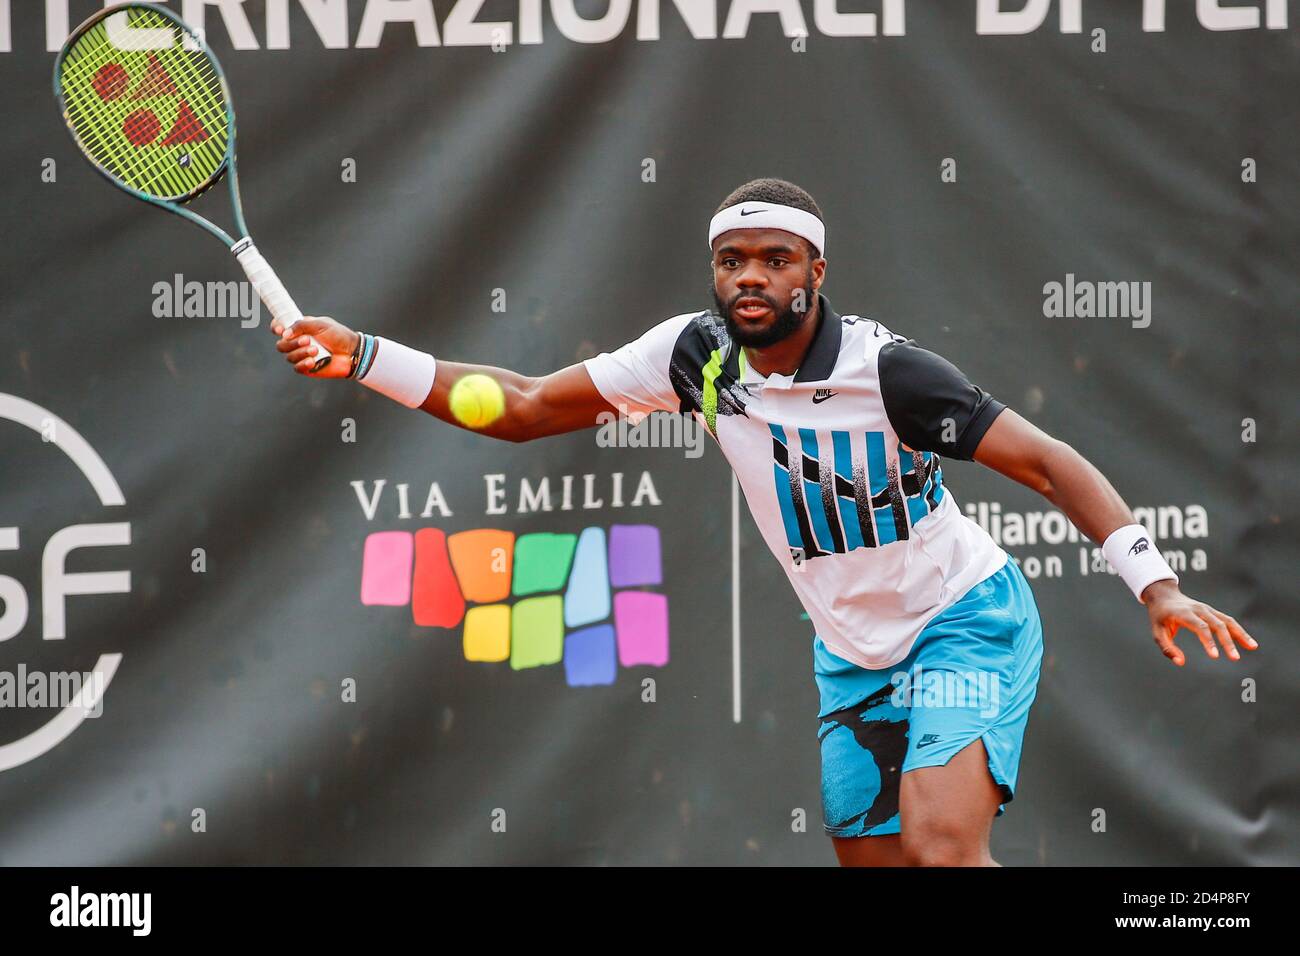 rances Tiafoe durante l'ATP Challenger 125 - internazionali Emilia Romagna, Tennis Internationals, parma, Italy, 09 Oct 2020 Credit: LM/Roberta Corradin Foto Stock